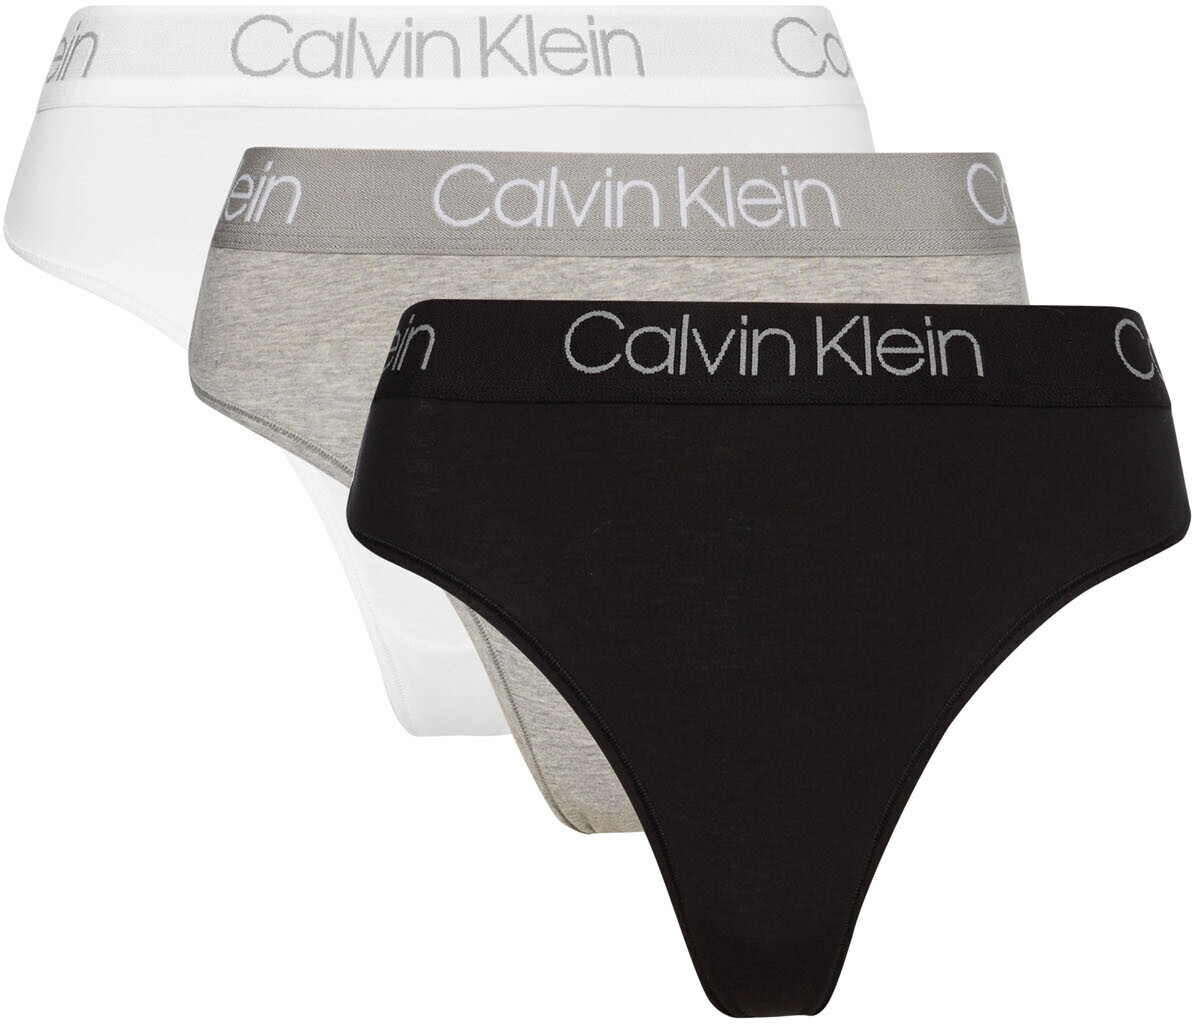 Calvin Klein Underwear BODY HIGH WAIST THONG - String - grey/grau 